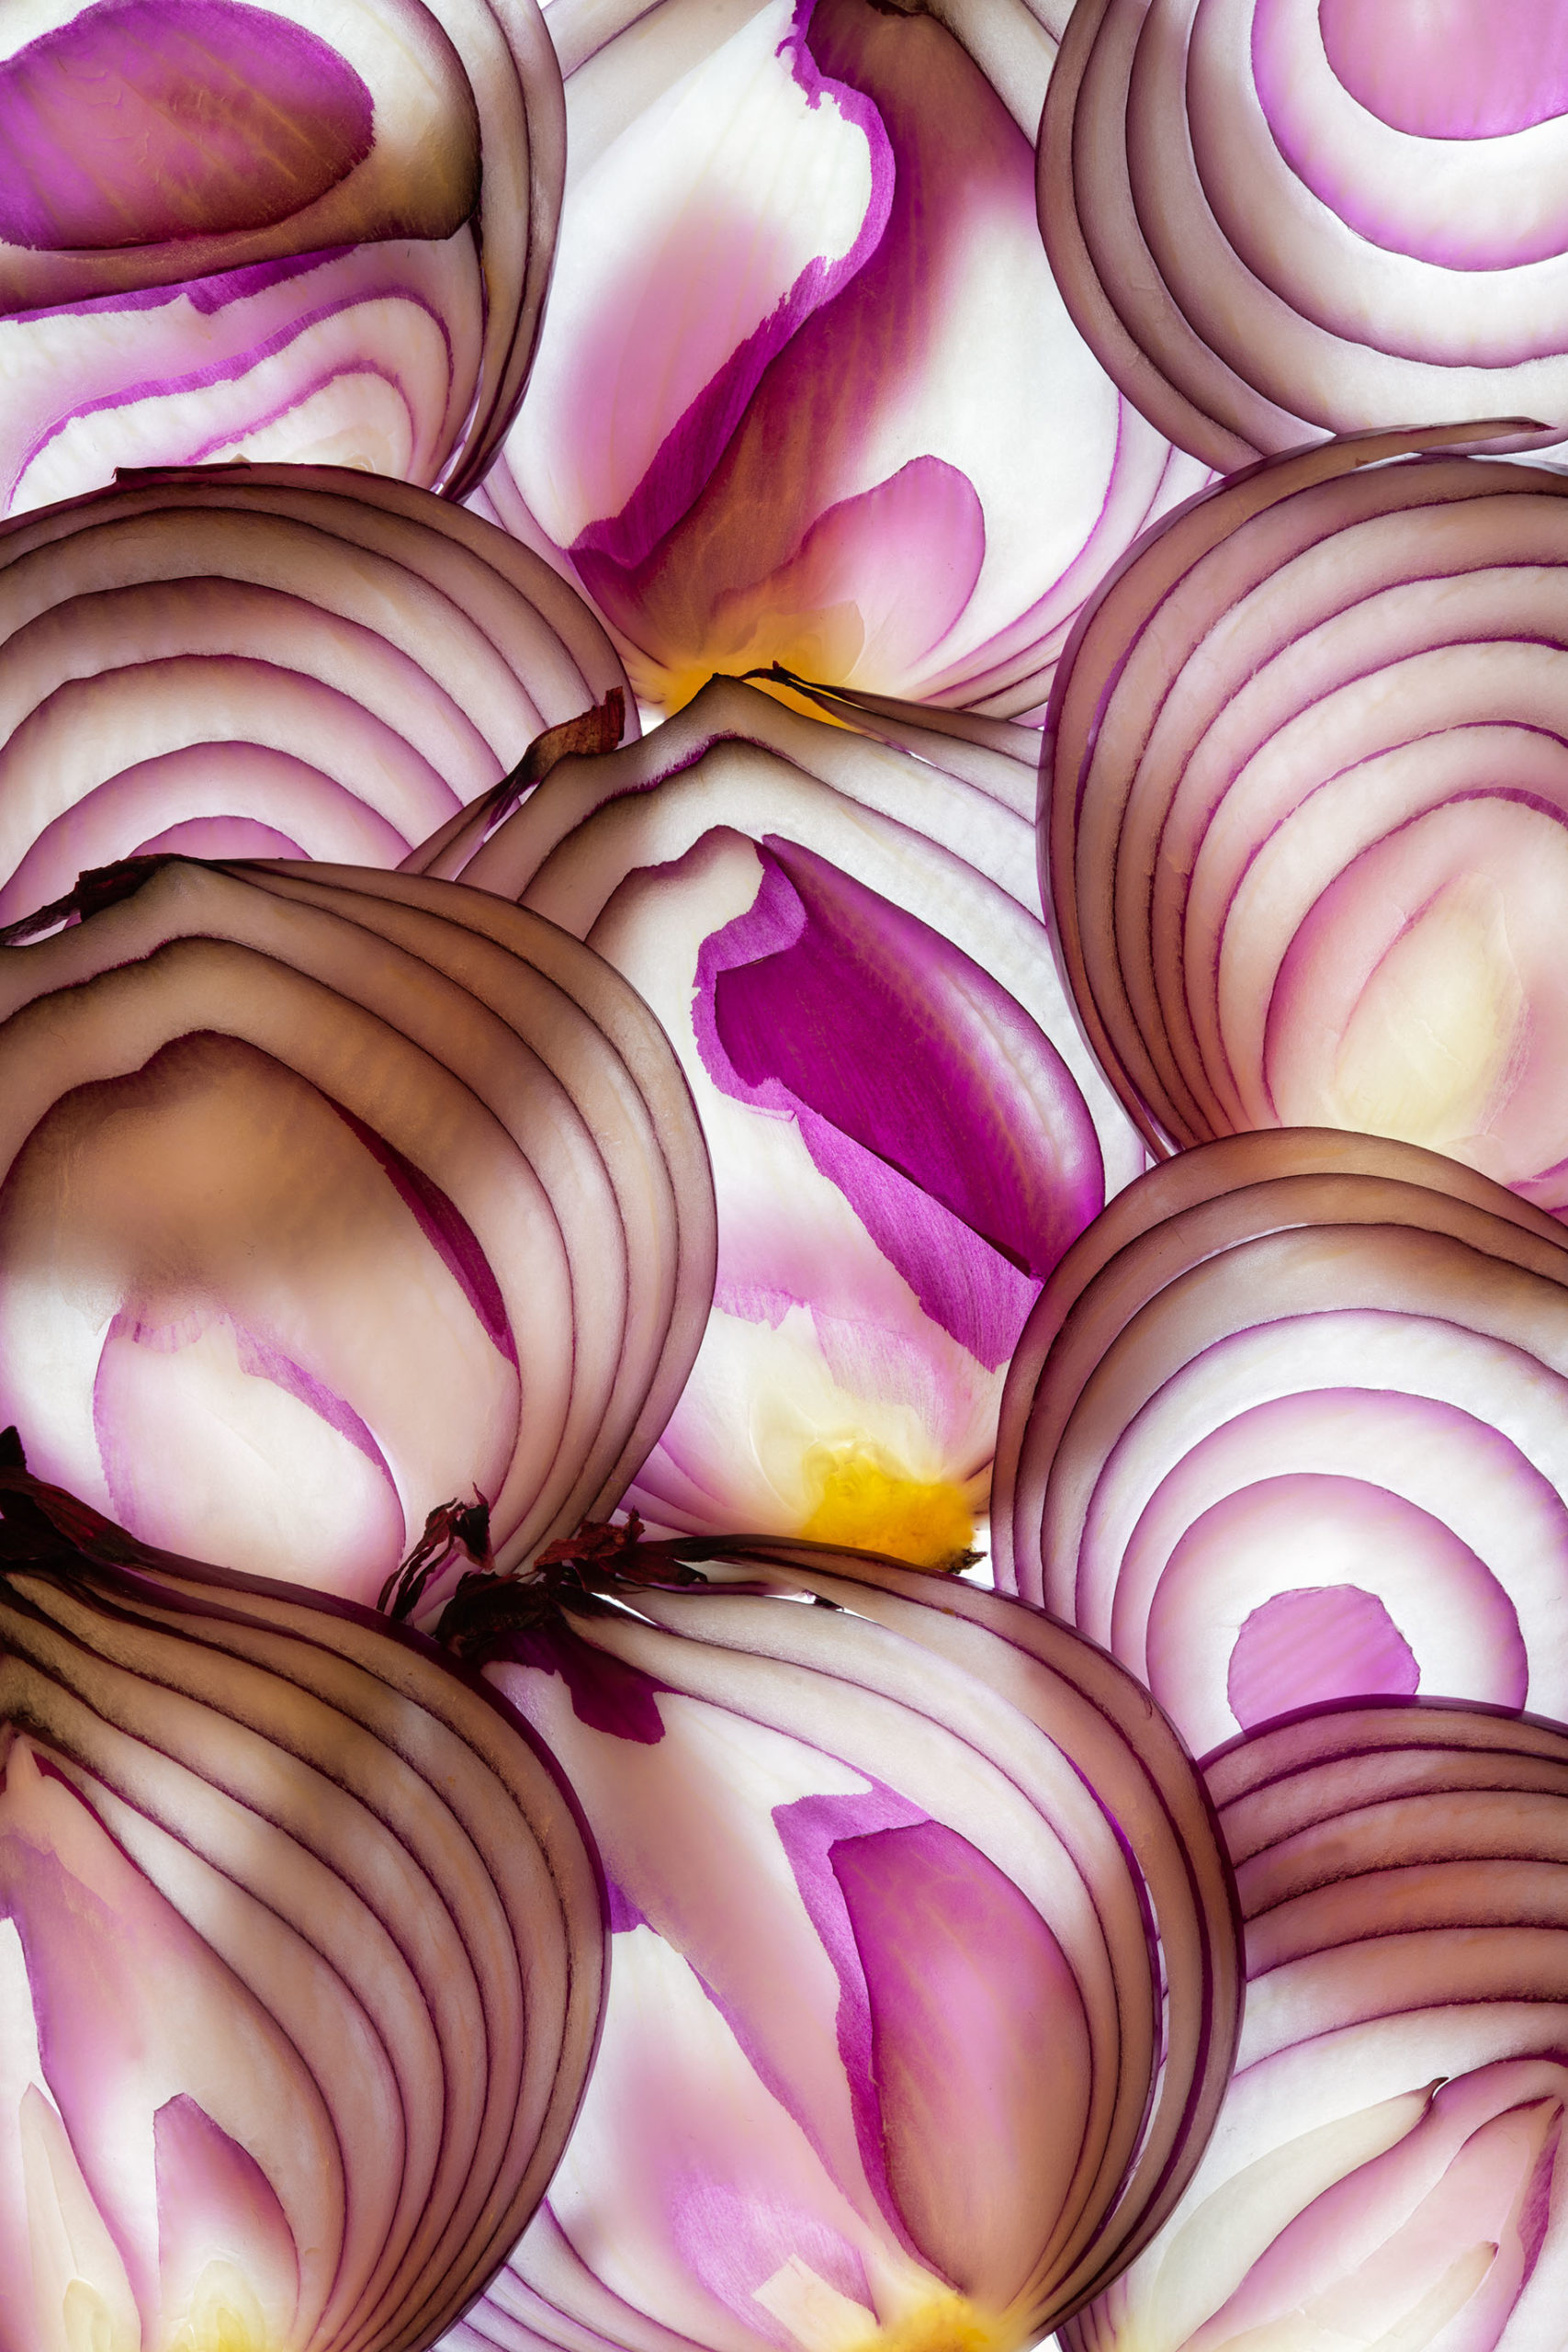 Red Onion Slices © Harold Davis